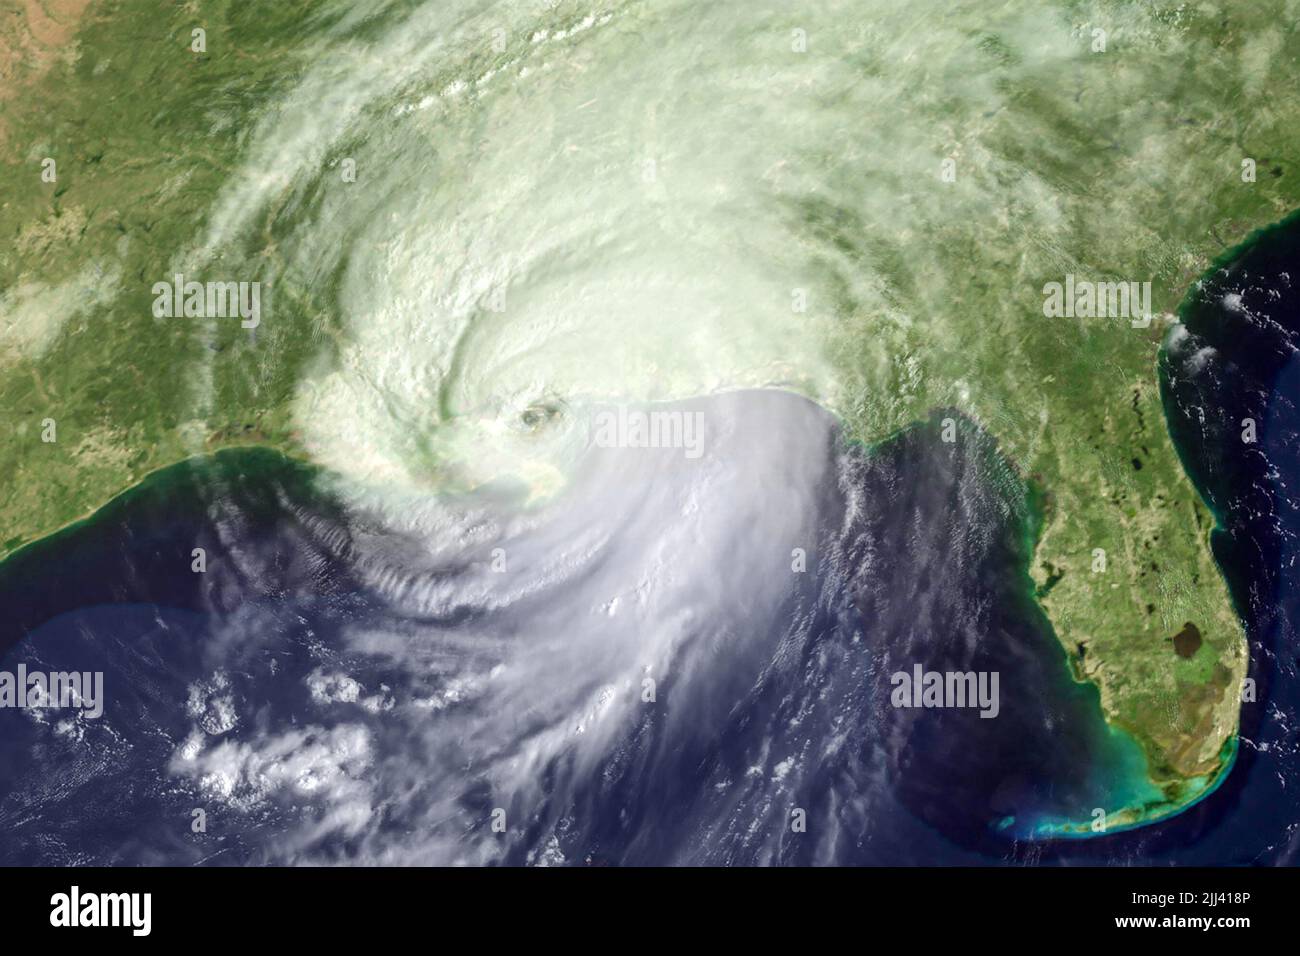 Hurricane Katrina, a devastating Category 5 storm, making landfall near New Orleans, Louisiana, on August 29, 2005. (USA) Stock Photo